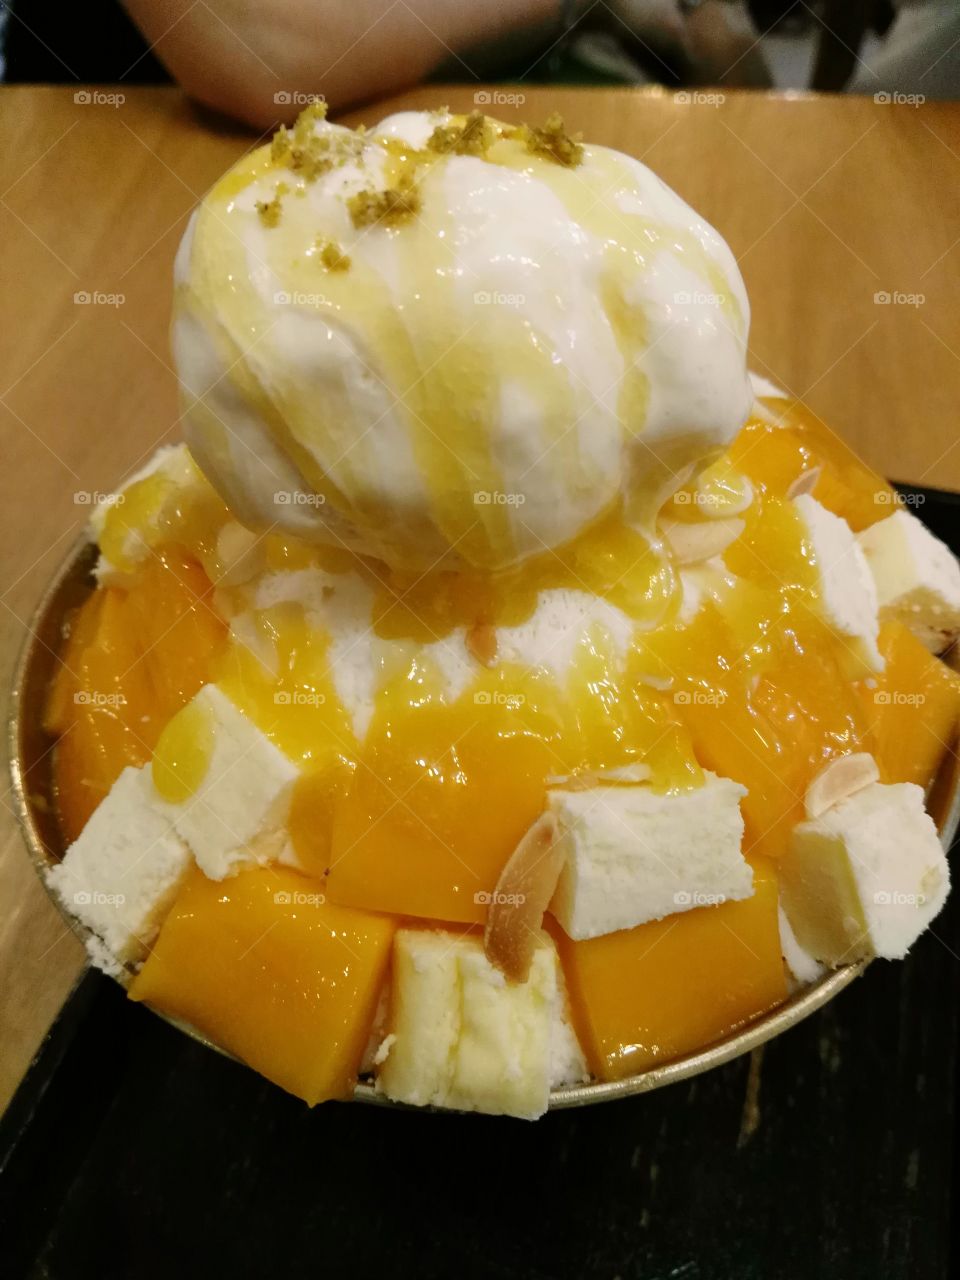 I love Mango ice cream